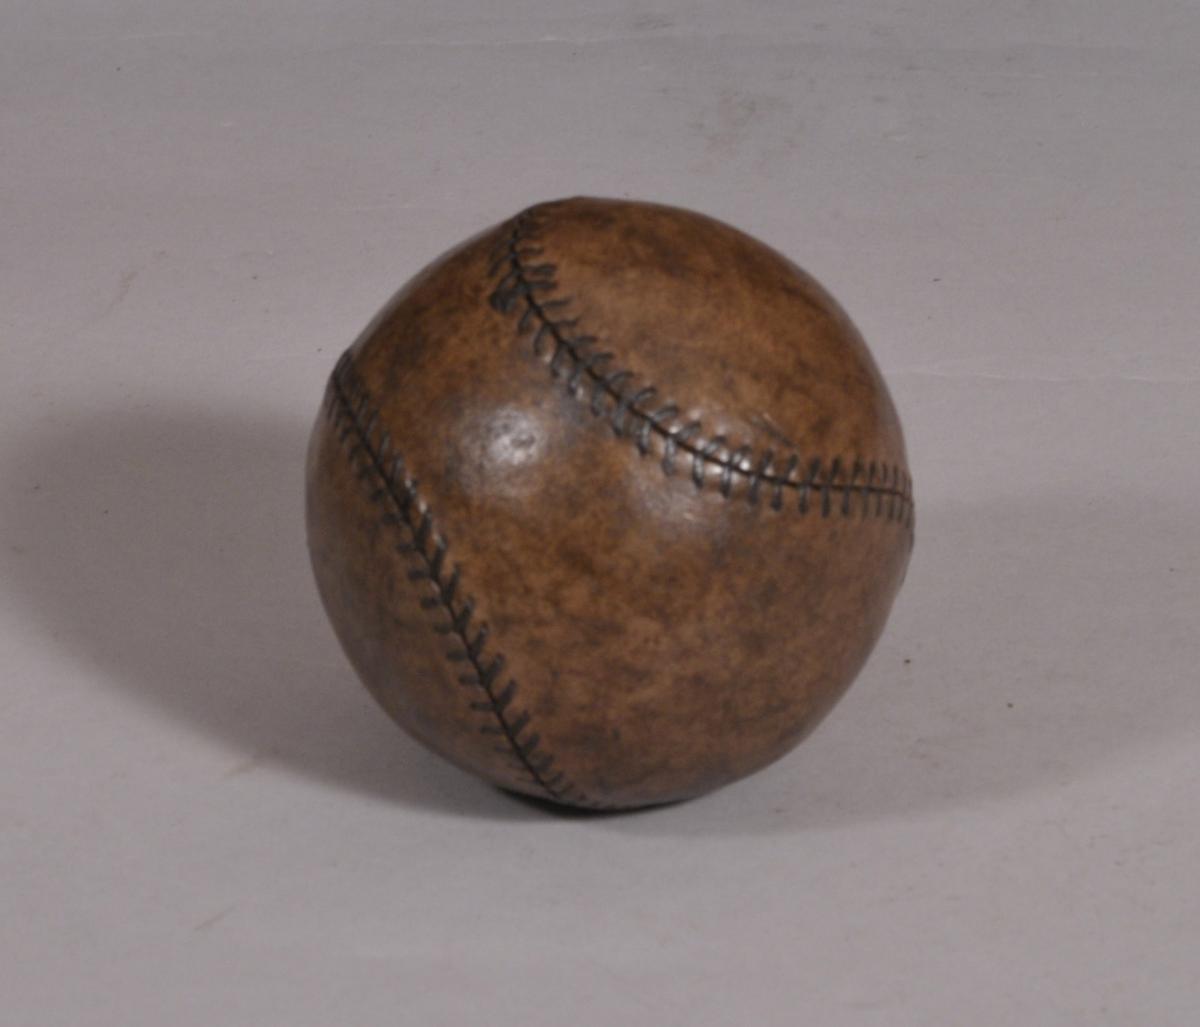 S/3902 Antique 19th Century Leather Softball